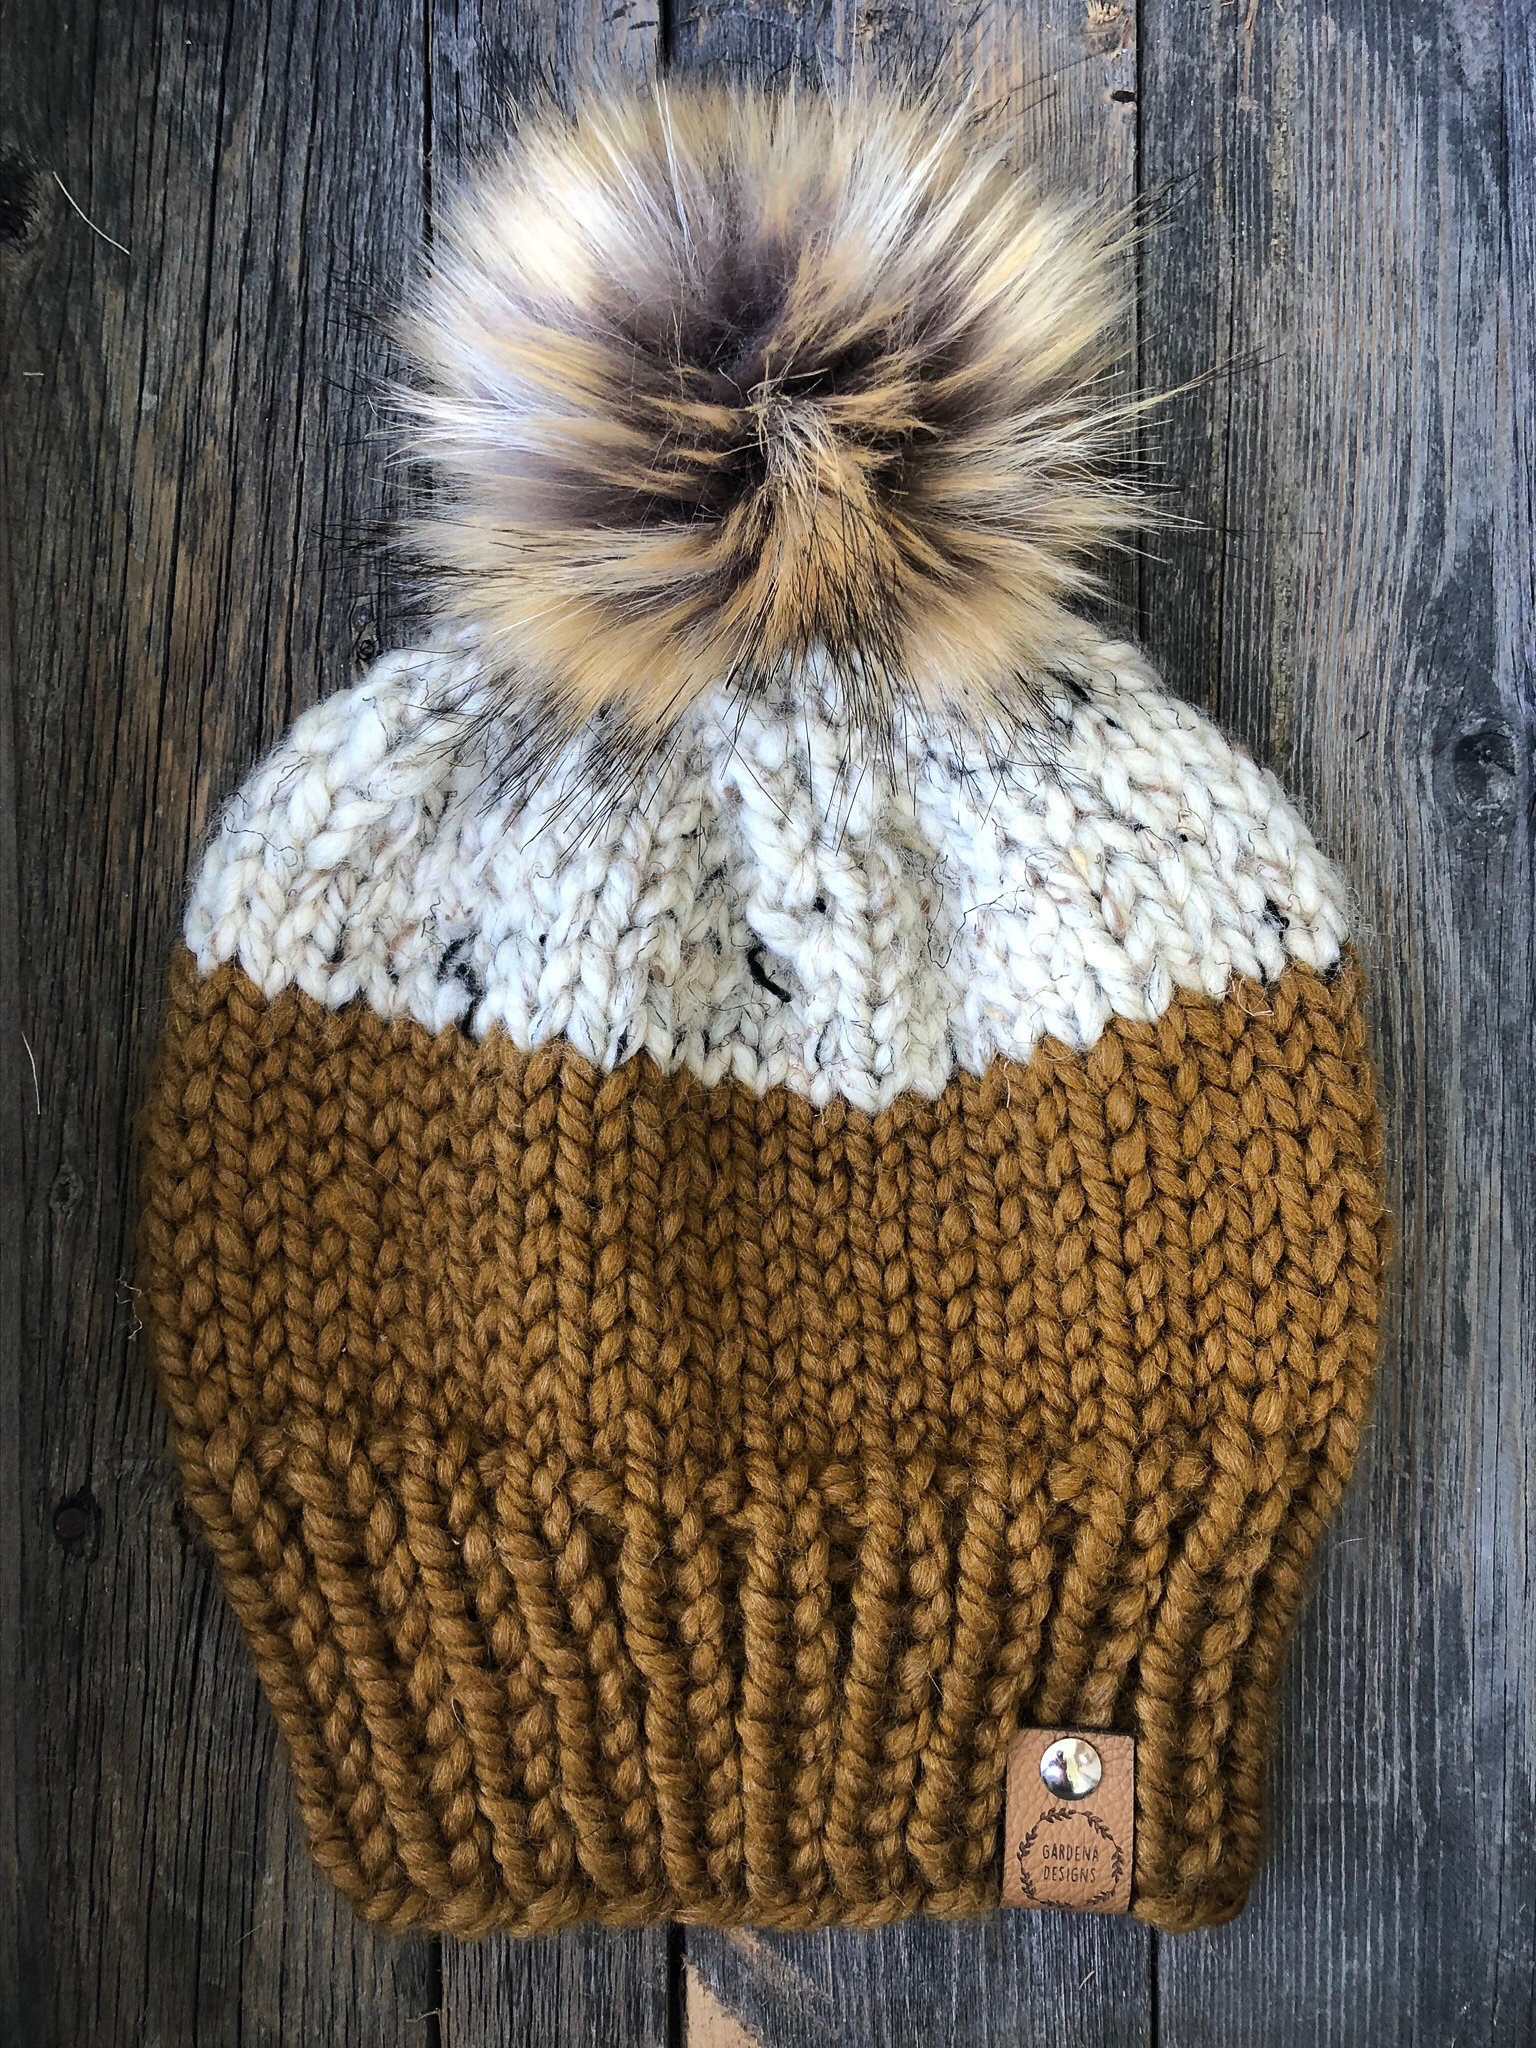 Custom hand-knitted hat with pom pom